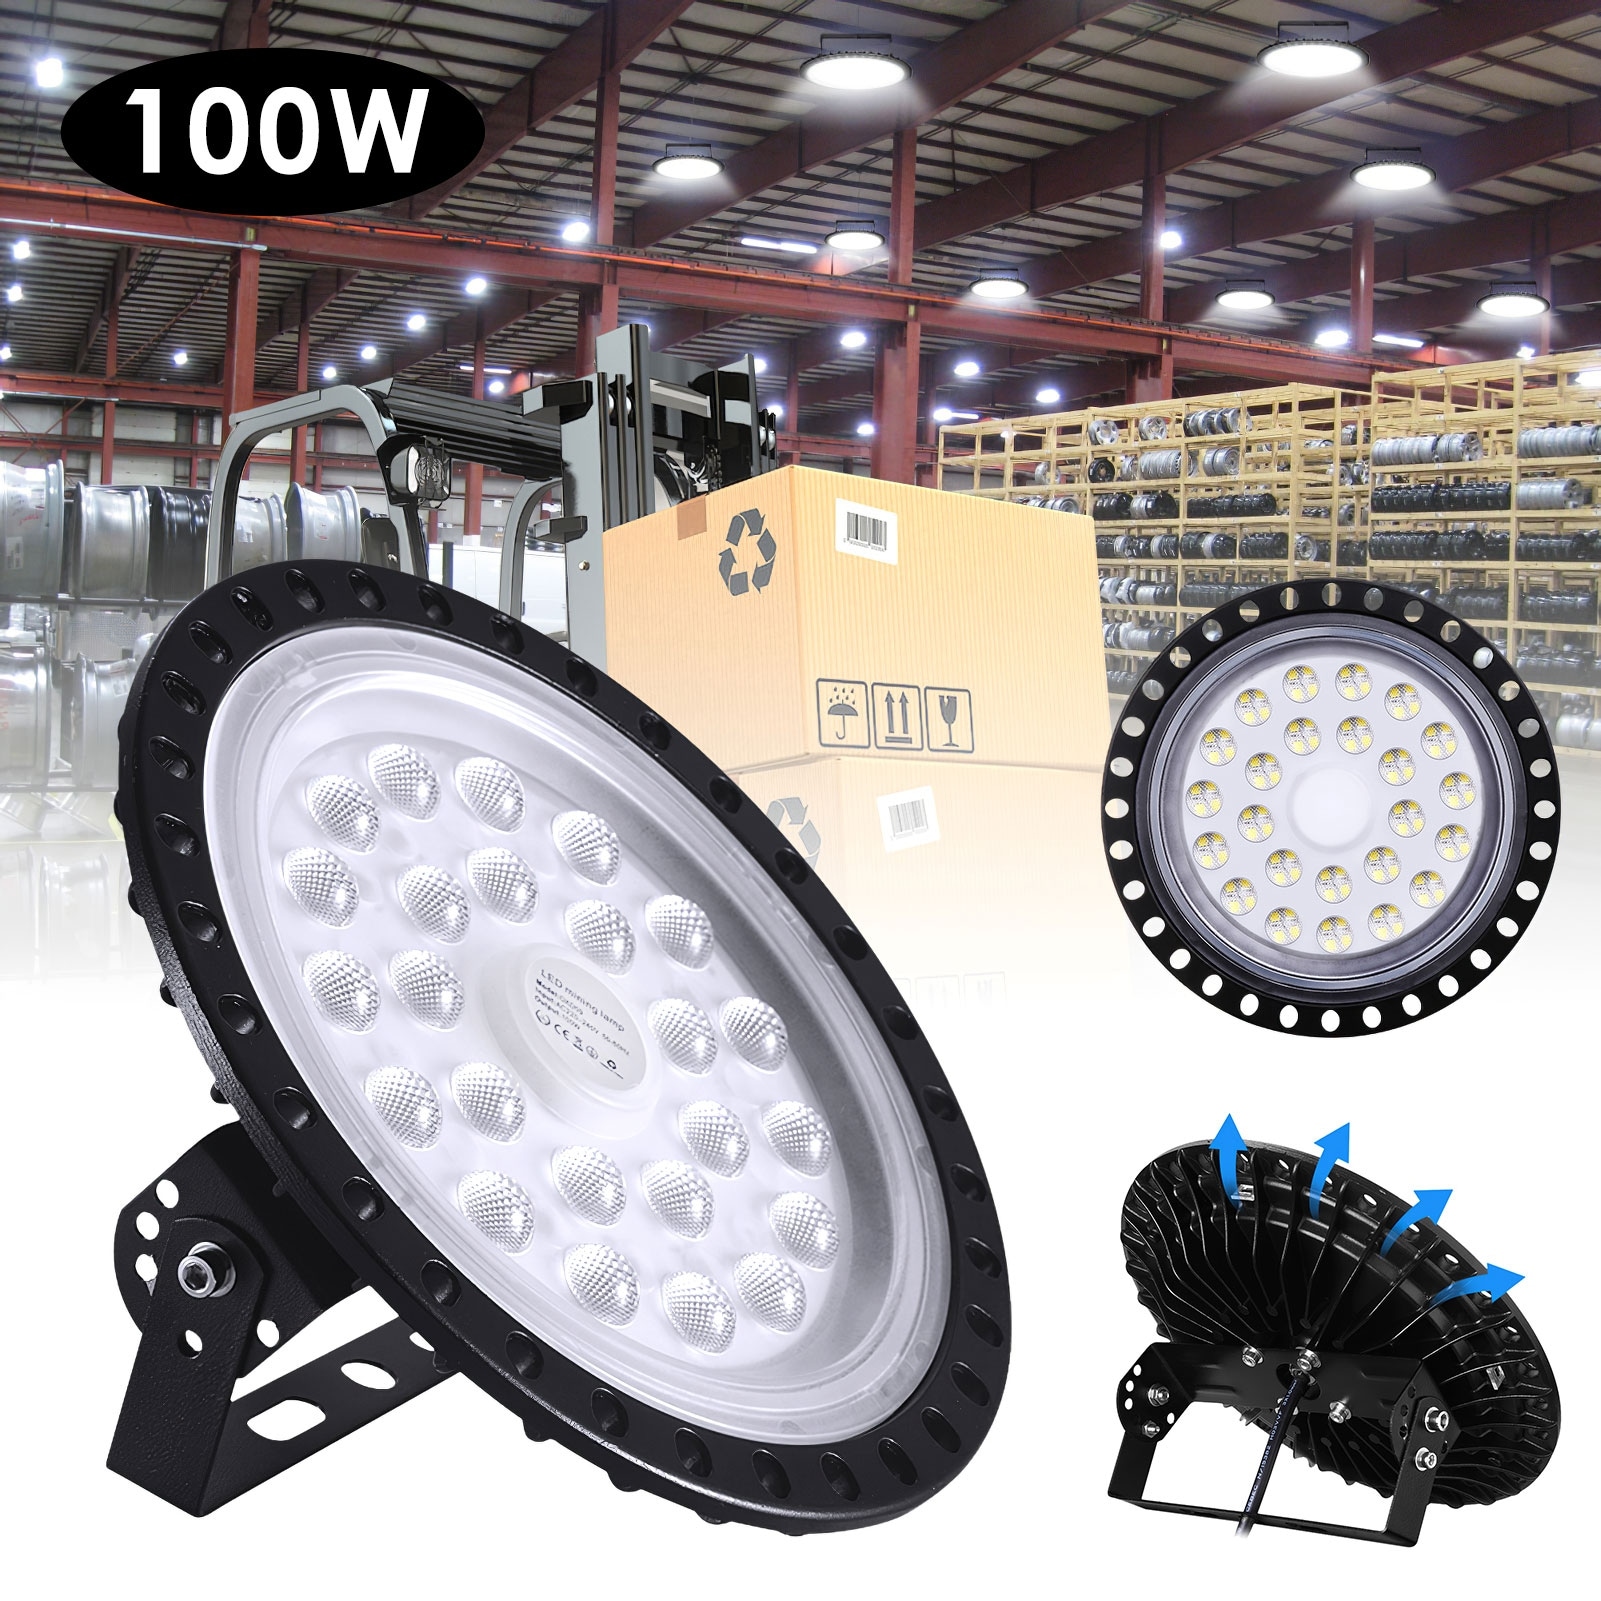 USA 500W 300W 200W 150W 100W LED High/Low Bay Lights Factory Warehouse Shop Lamp 